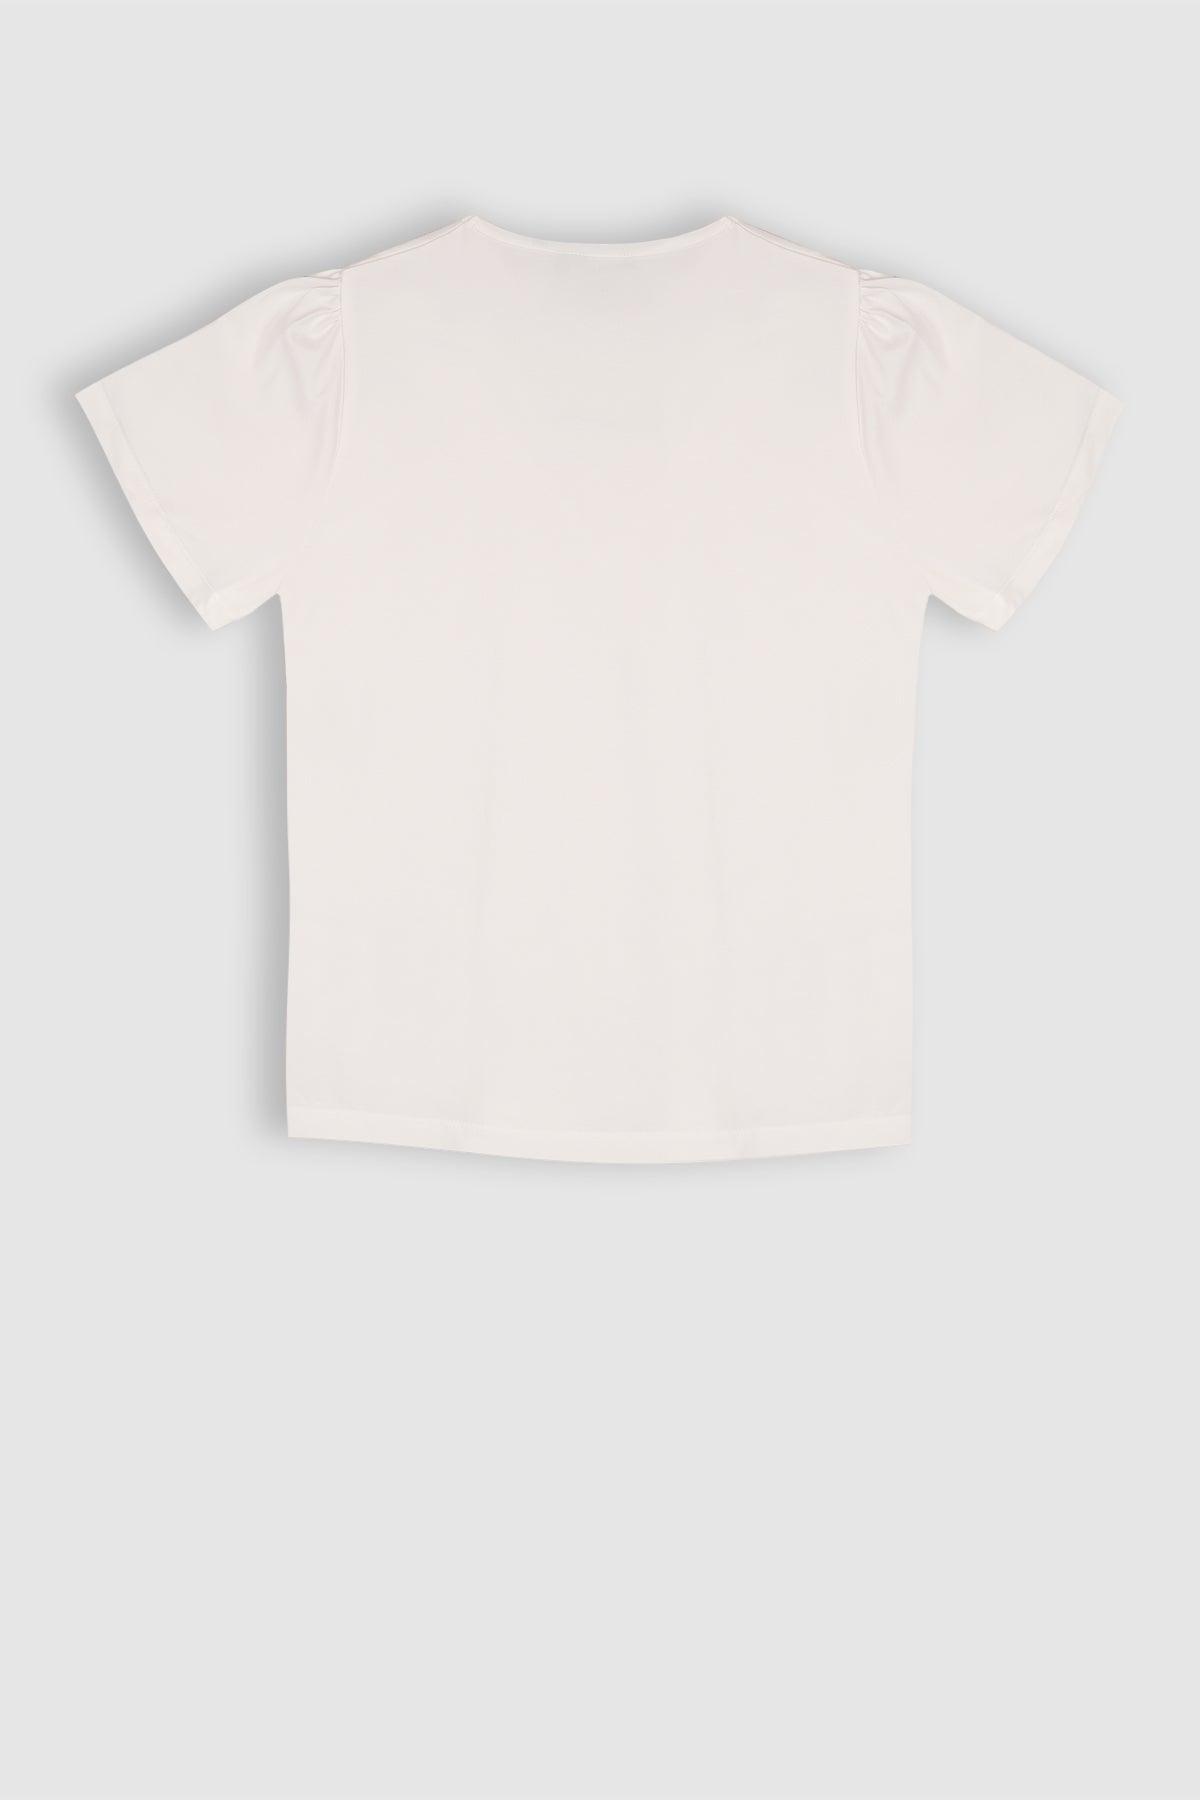 Koala Tshirt VShape Detail Snow White - NoNo Kidswear